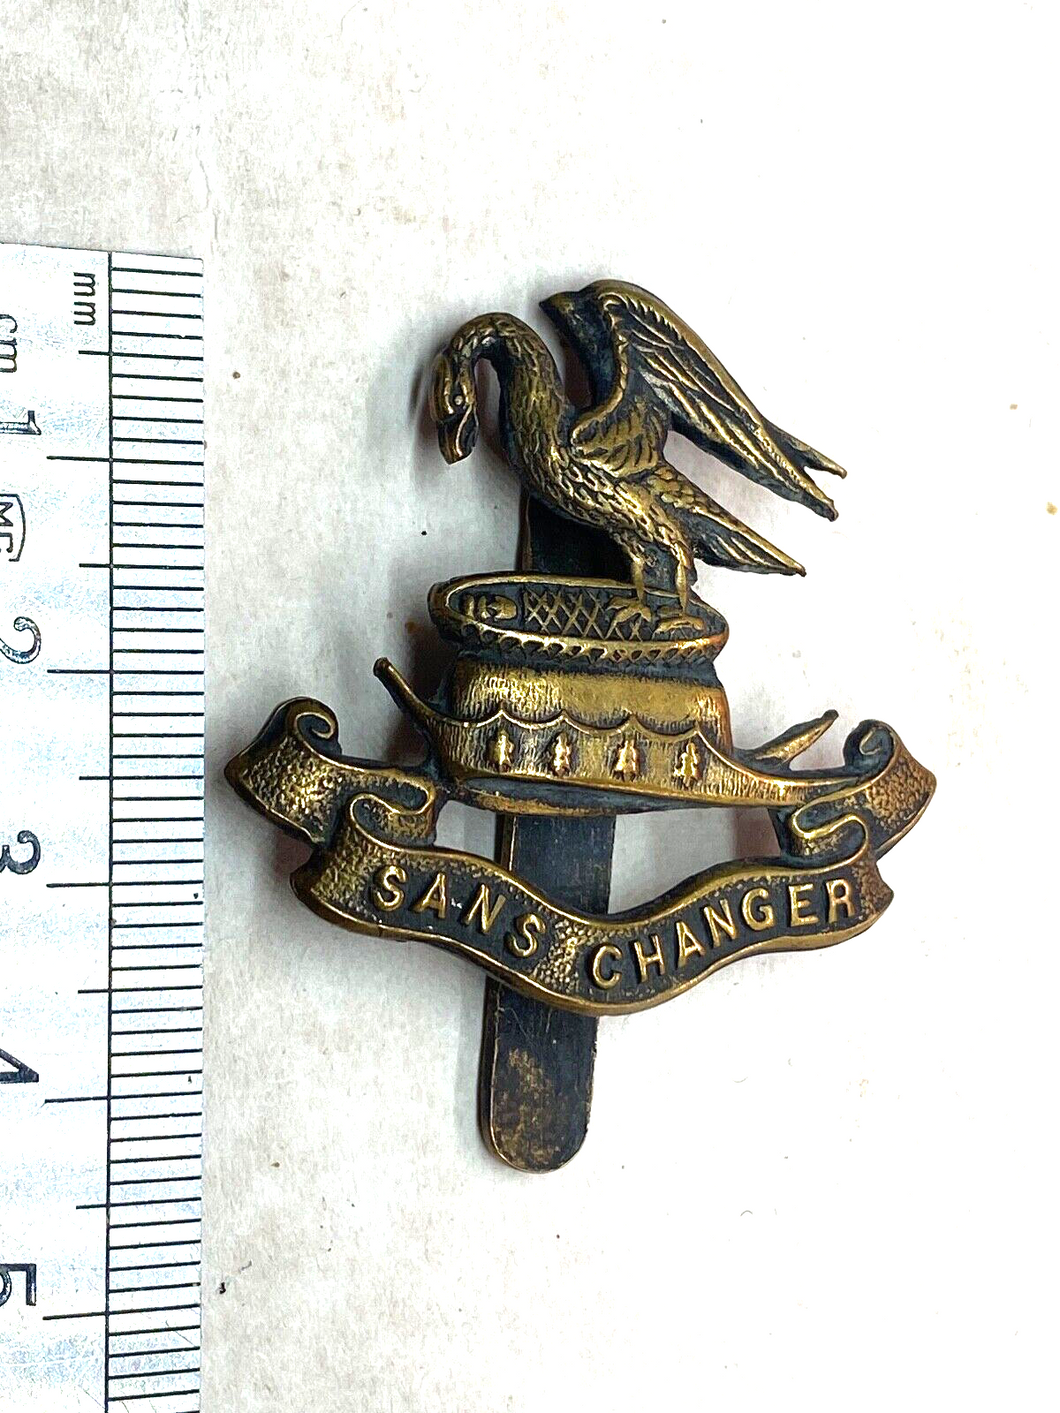 Original WW1 British Army Liverpool Pals Army Cap Badge – Sans Changer